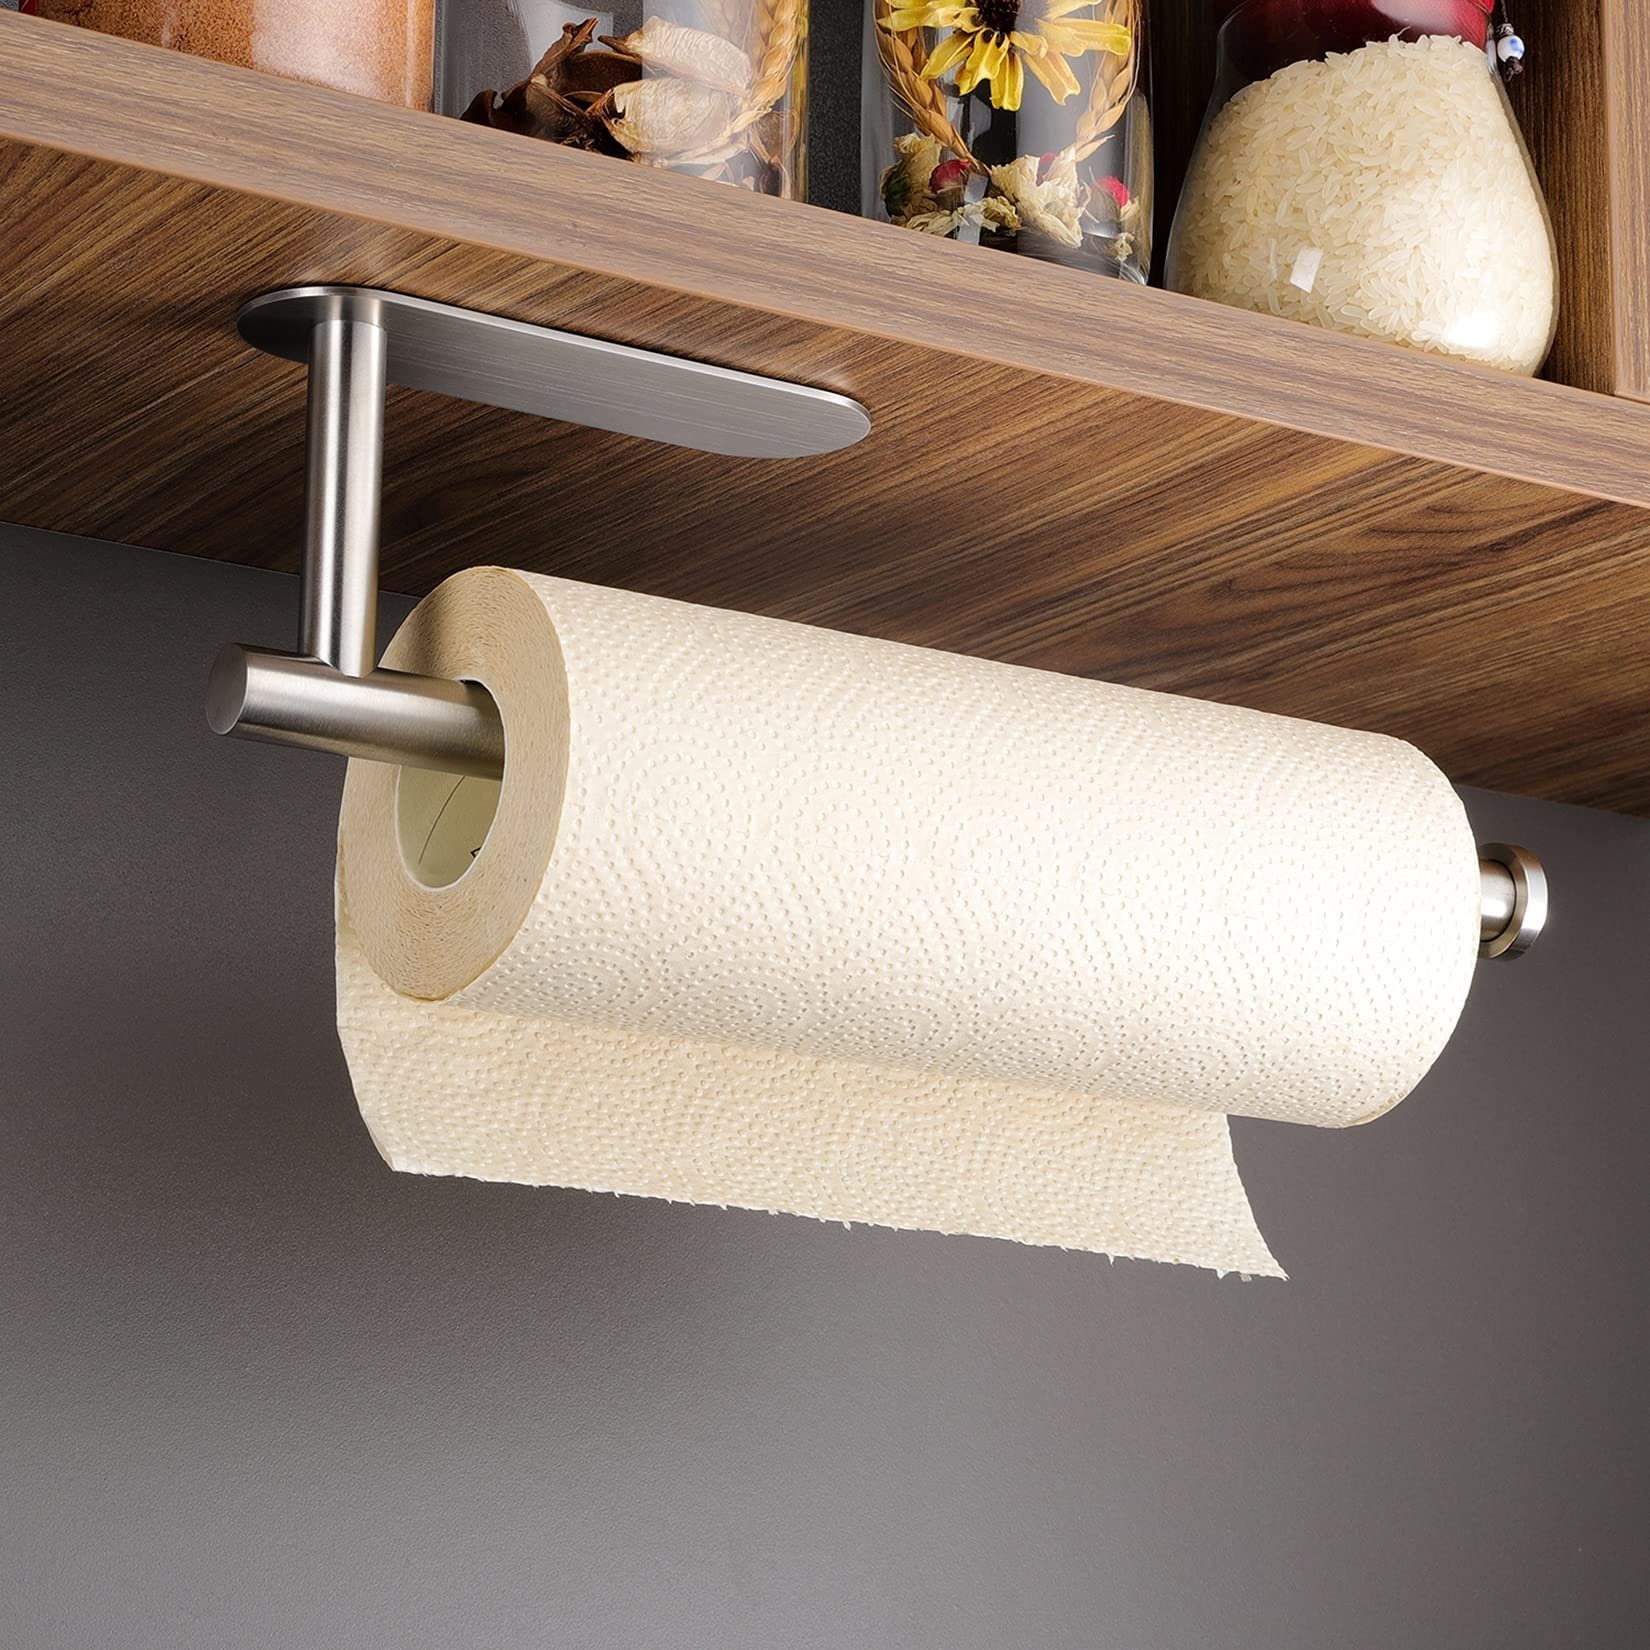 Haiaveng Toilettenpapierhalter Bohren Silber Toilettenpapierhalter,kein selbstklebender, erforderlich, Bohren Kein